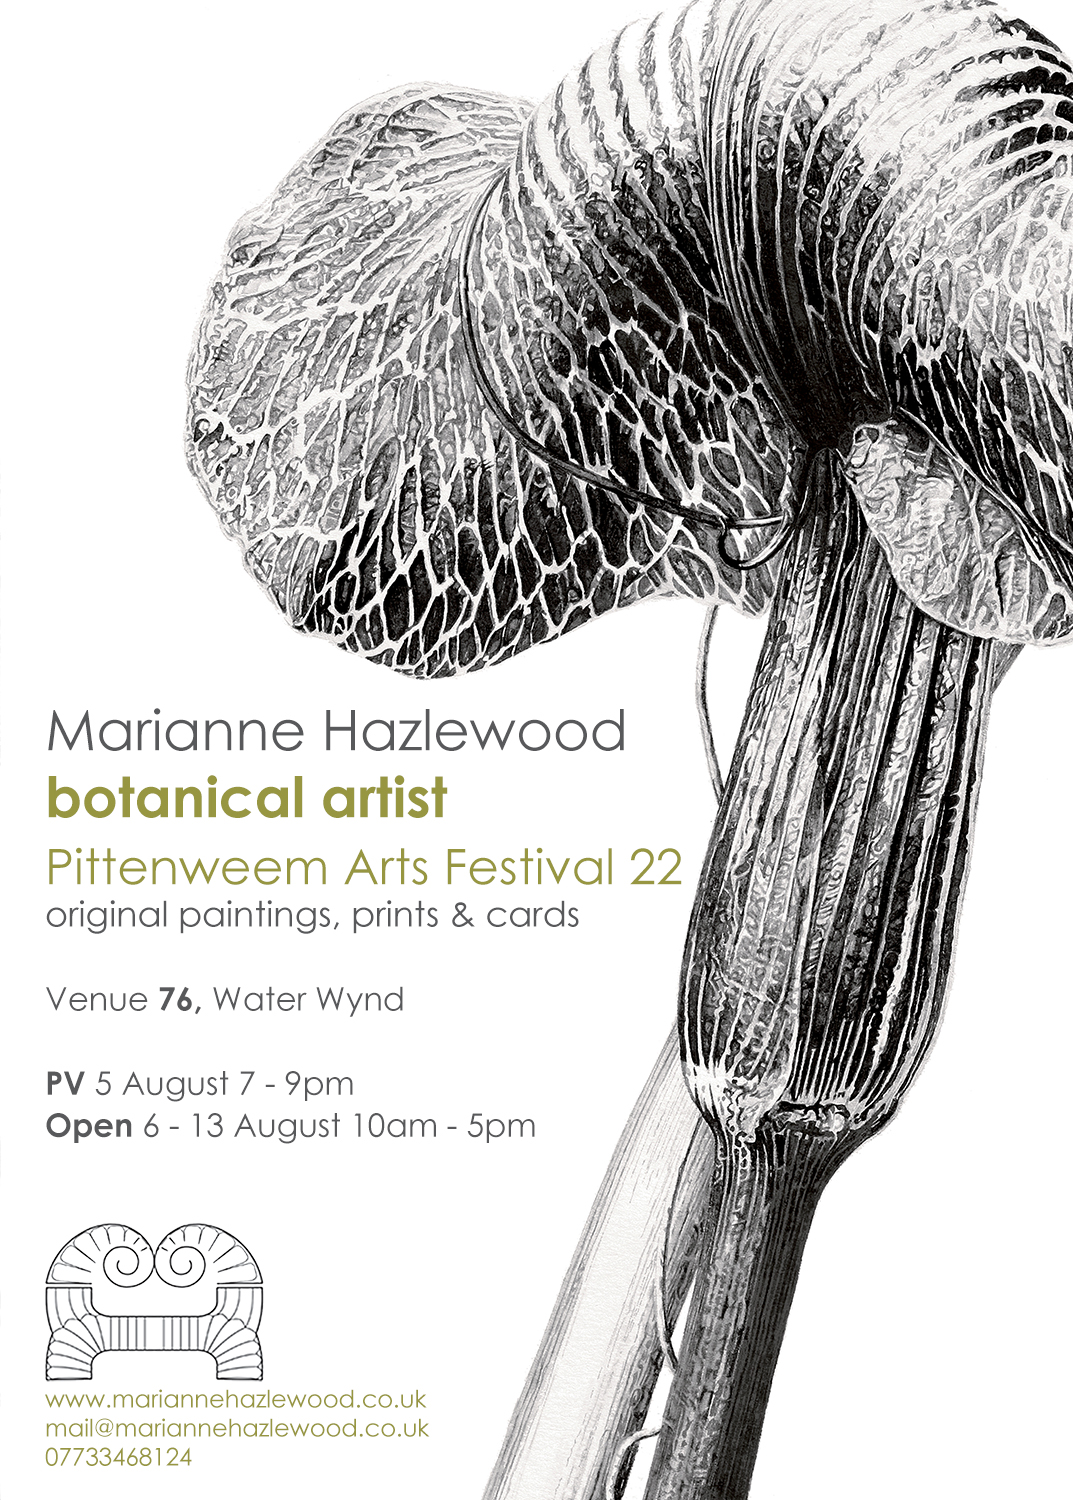 Marianne Hazlewood, botanical artist, Pittenweem Arts Festival 22, Venue 76 Water Wynd, PV 5 August 7 - 9pm, Open 6 - 13 August, 10am - 5pm